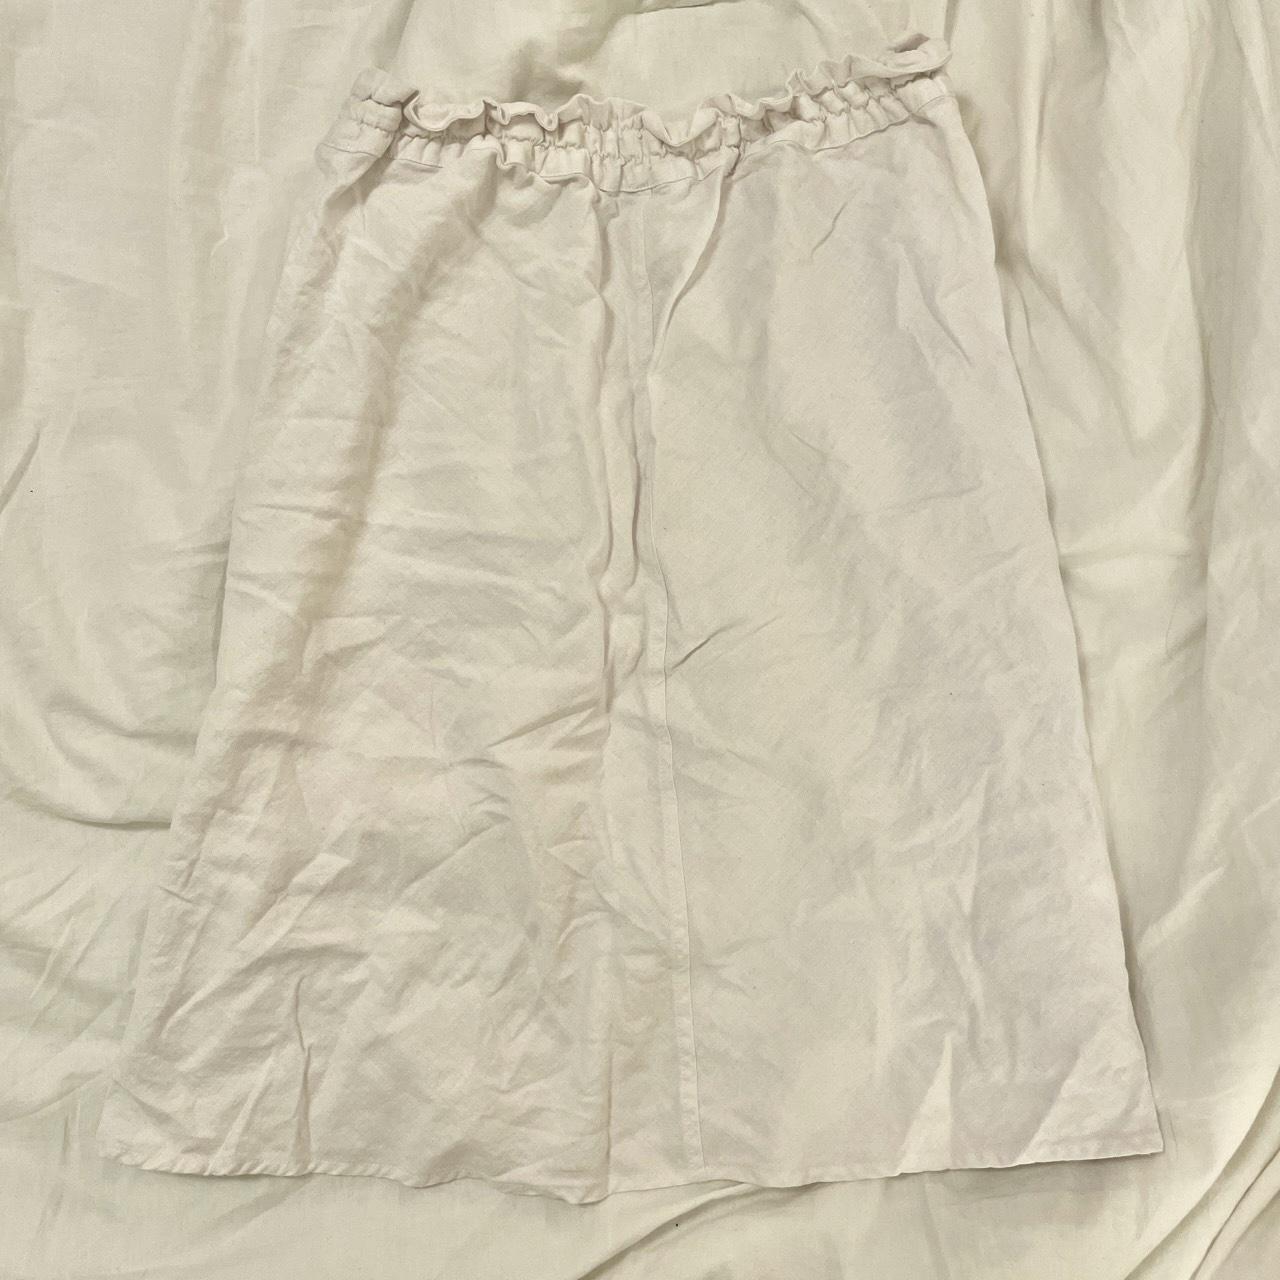 H&M Off-White Petticoat/Skirt. Adjustable... - Depop